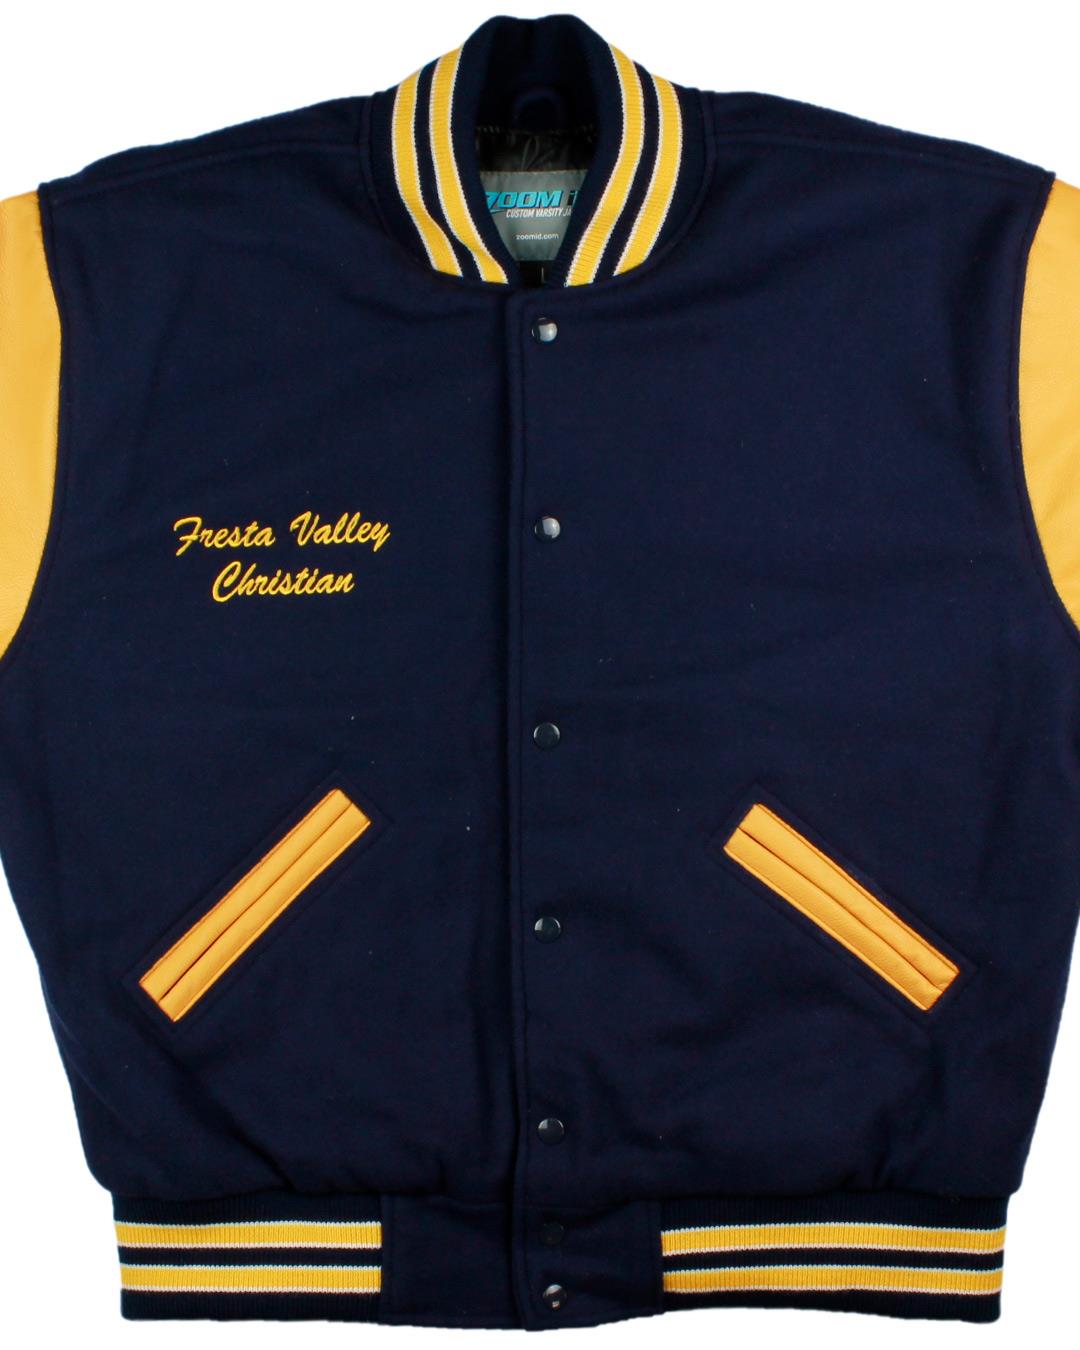 Fresta Valley Christian School Lettermen Jacket, Marshall, VA - 